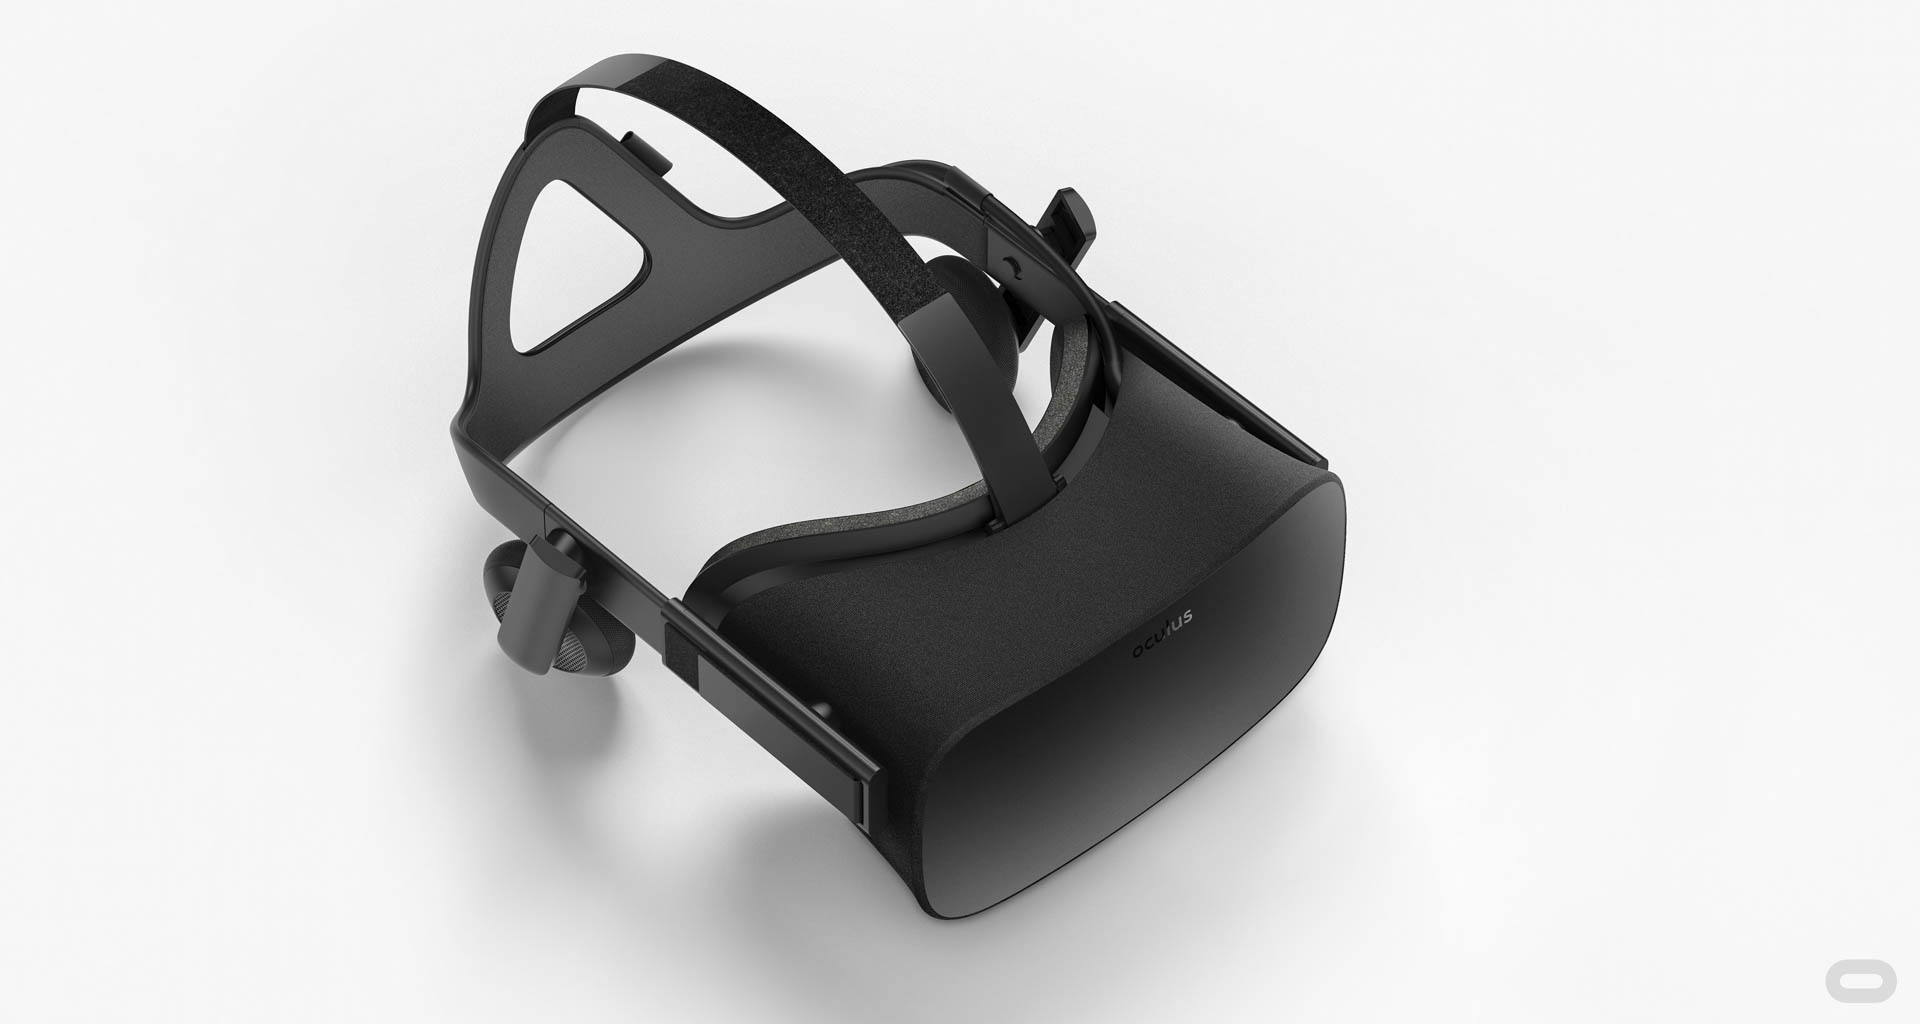 Oculus Rift VR headset. Image: Oculus.